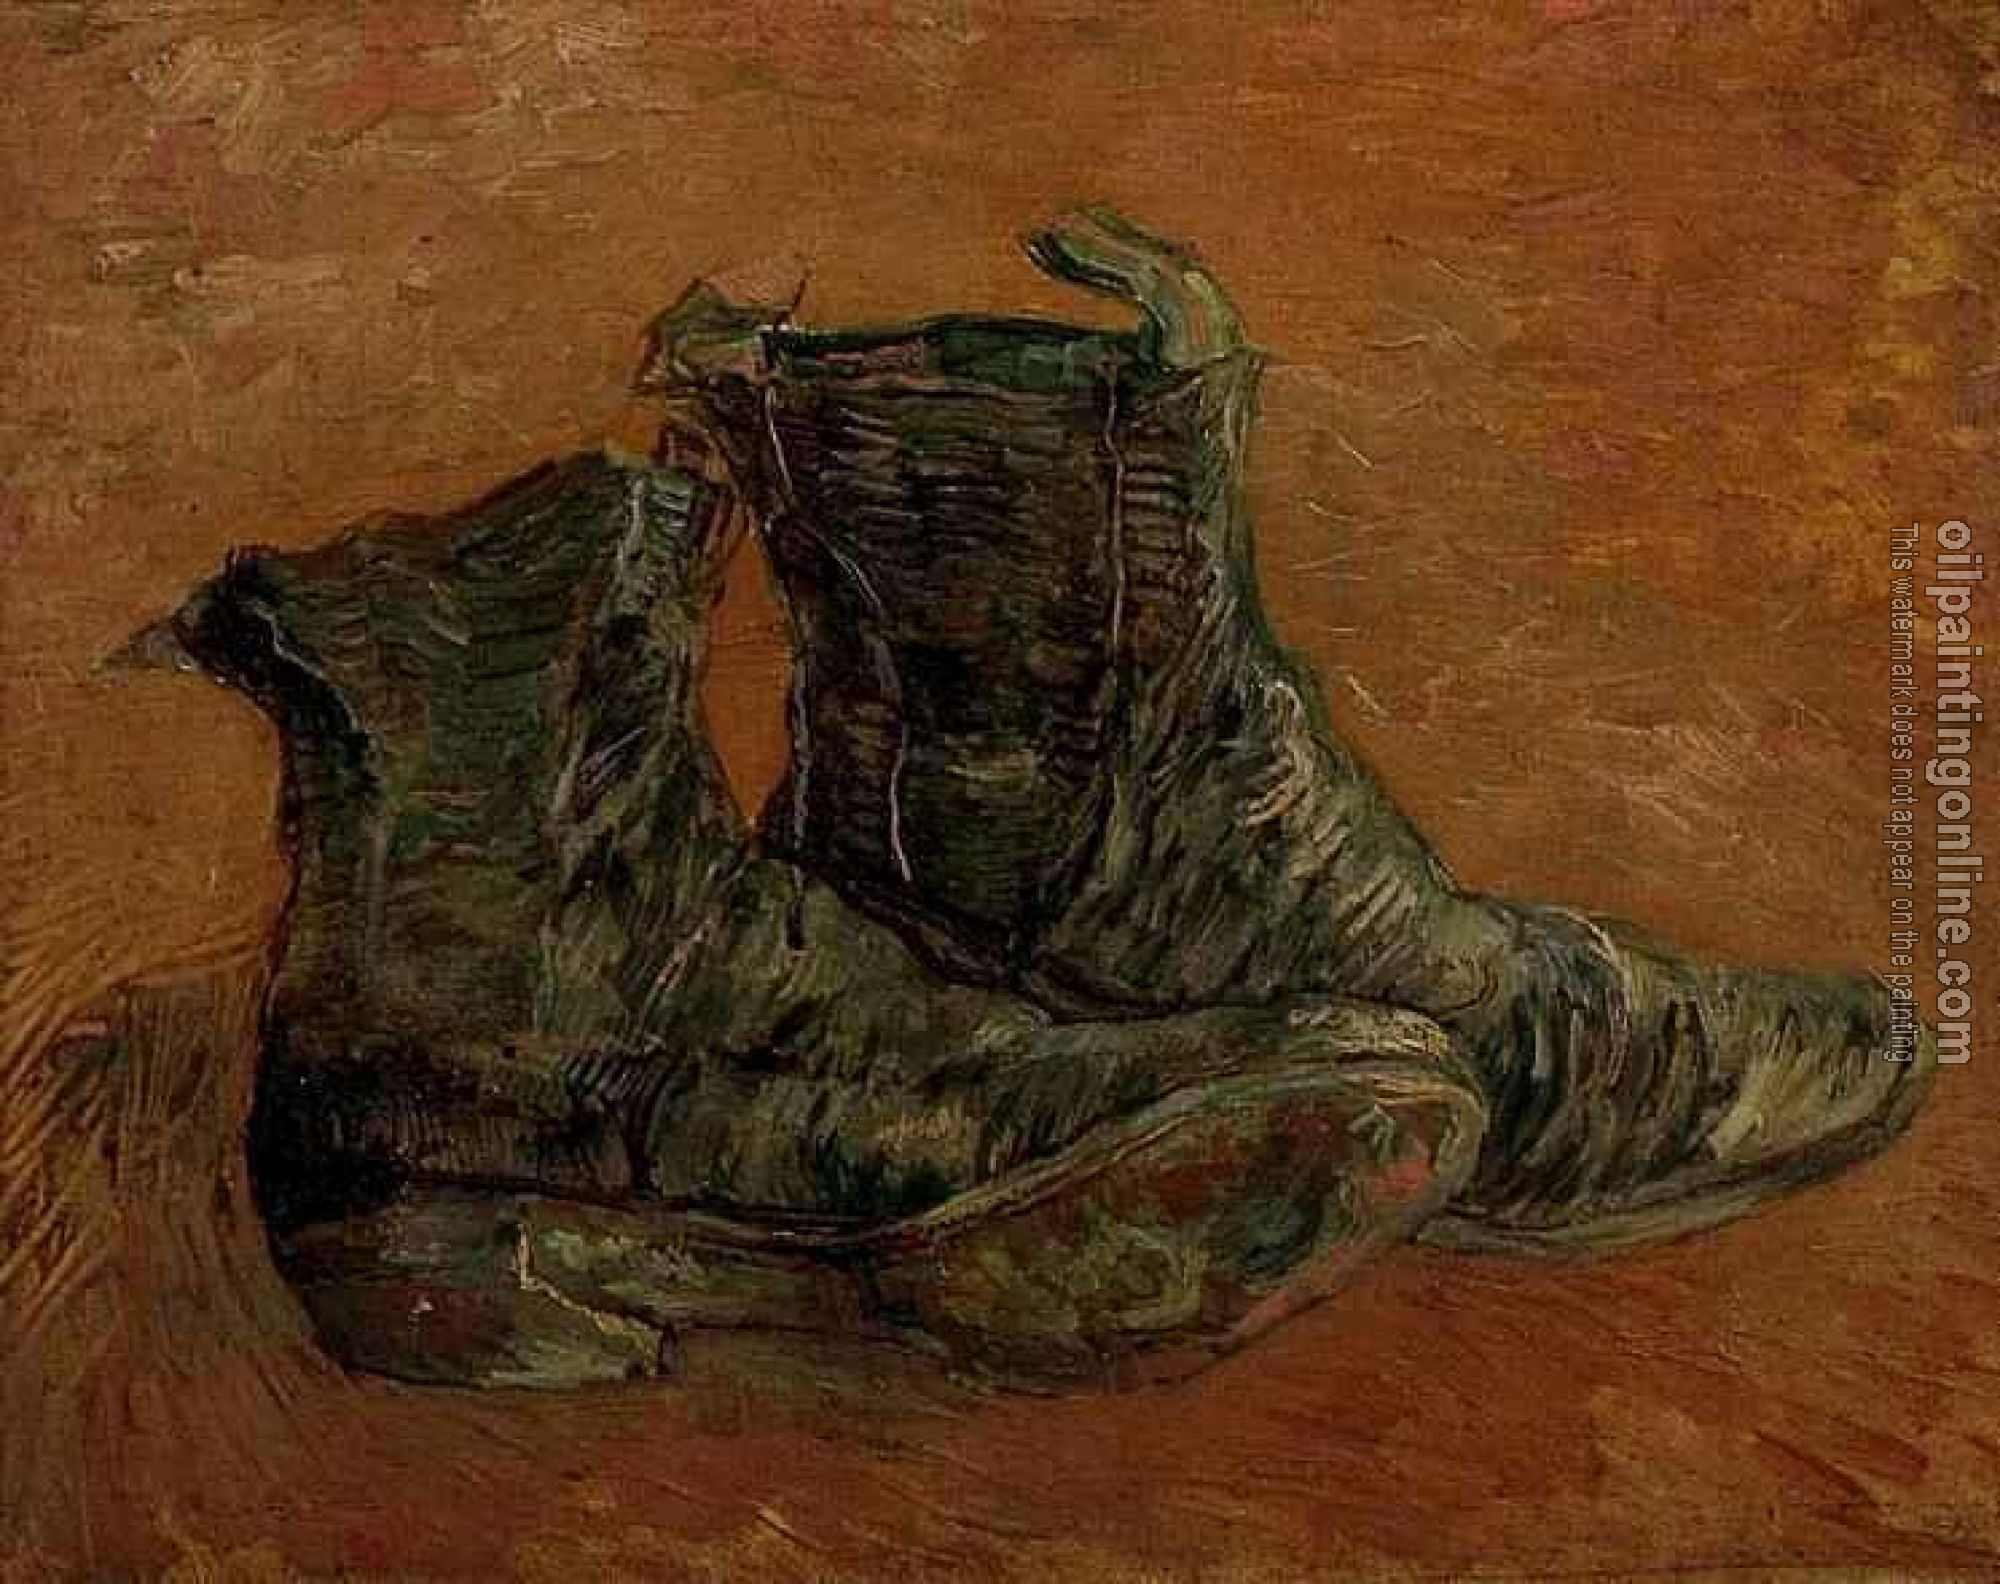 Gogh, Vincent van - A Pair of Shoes